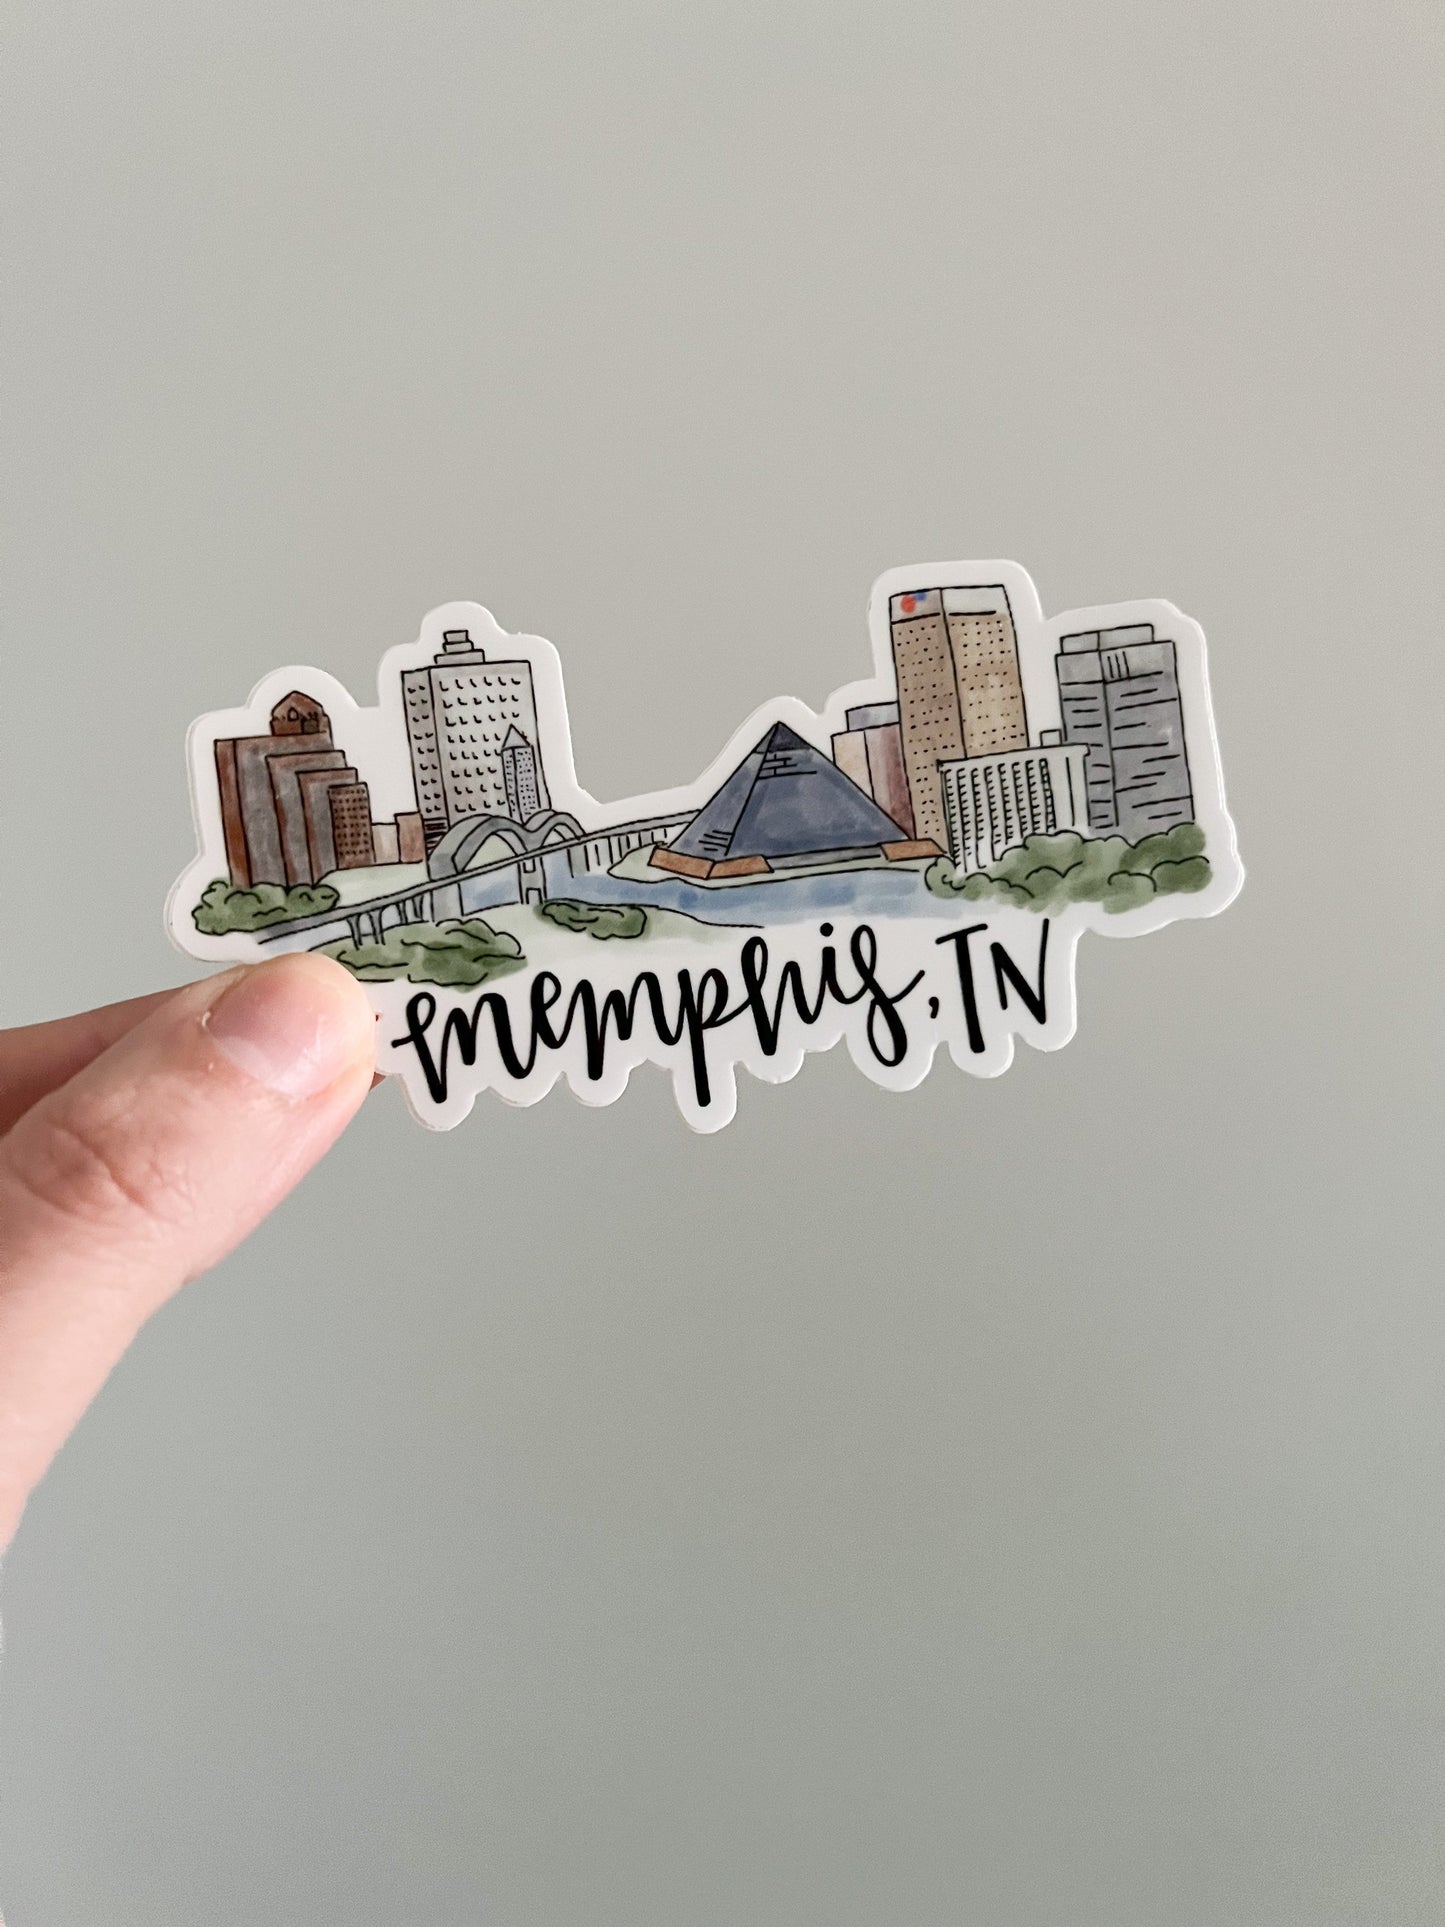 Memphis Tennessee Skyline/landmark sticker